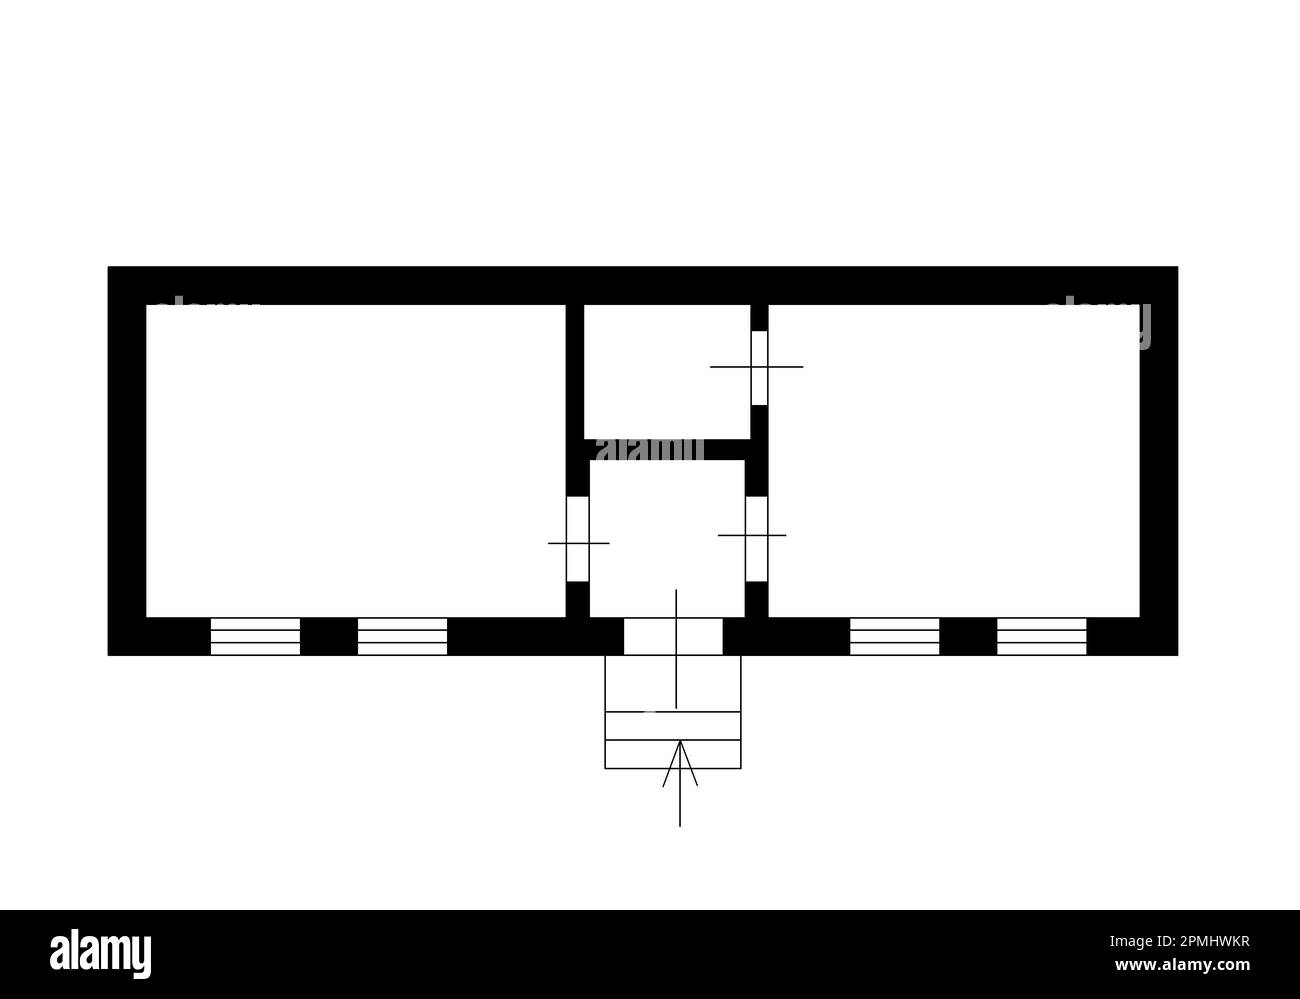 Grundriss. Apartmentplan mit Bauelementen. Hausprojekt. 2D. Grundriss. Schwarz-weißer Grundriss. 2D. Grundriss Stockfoto